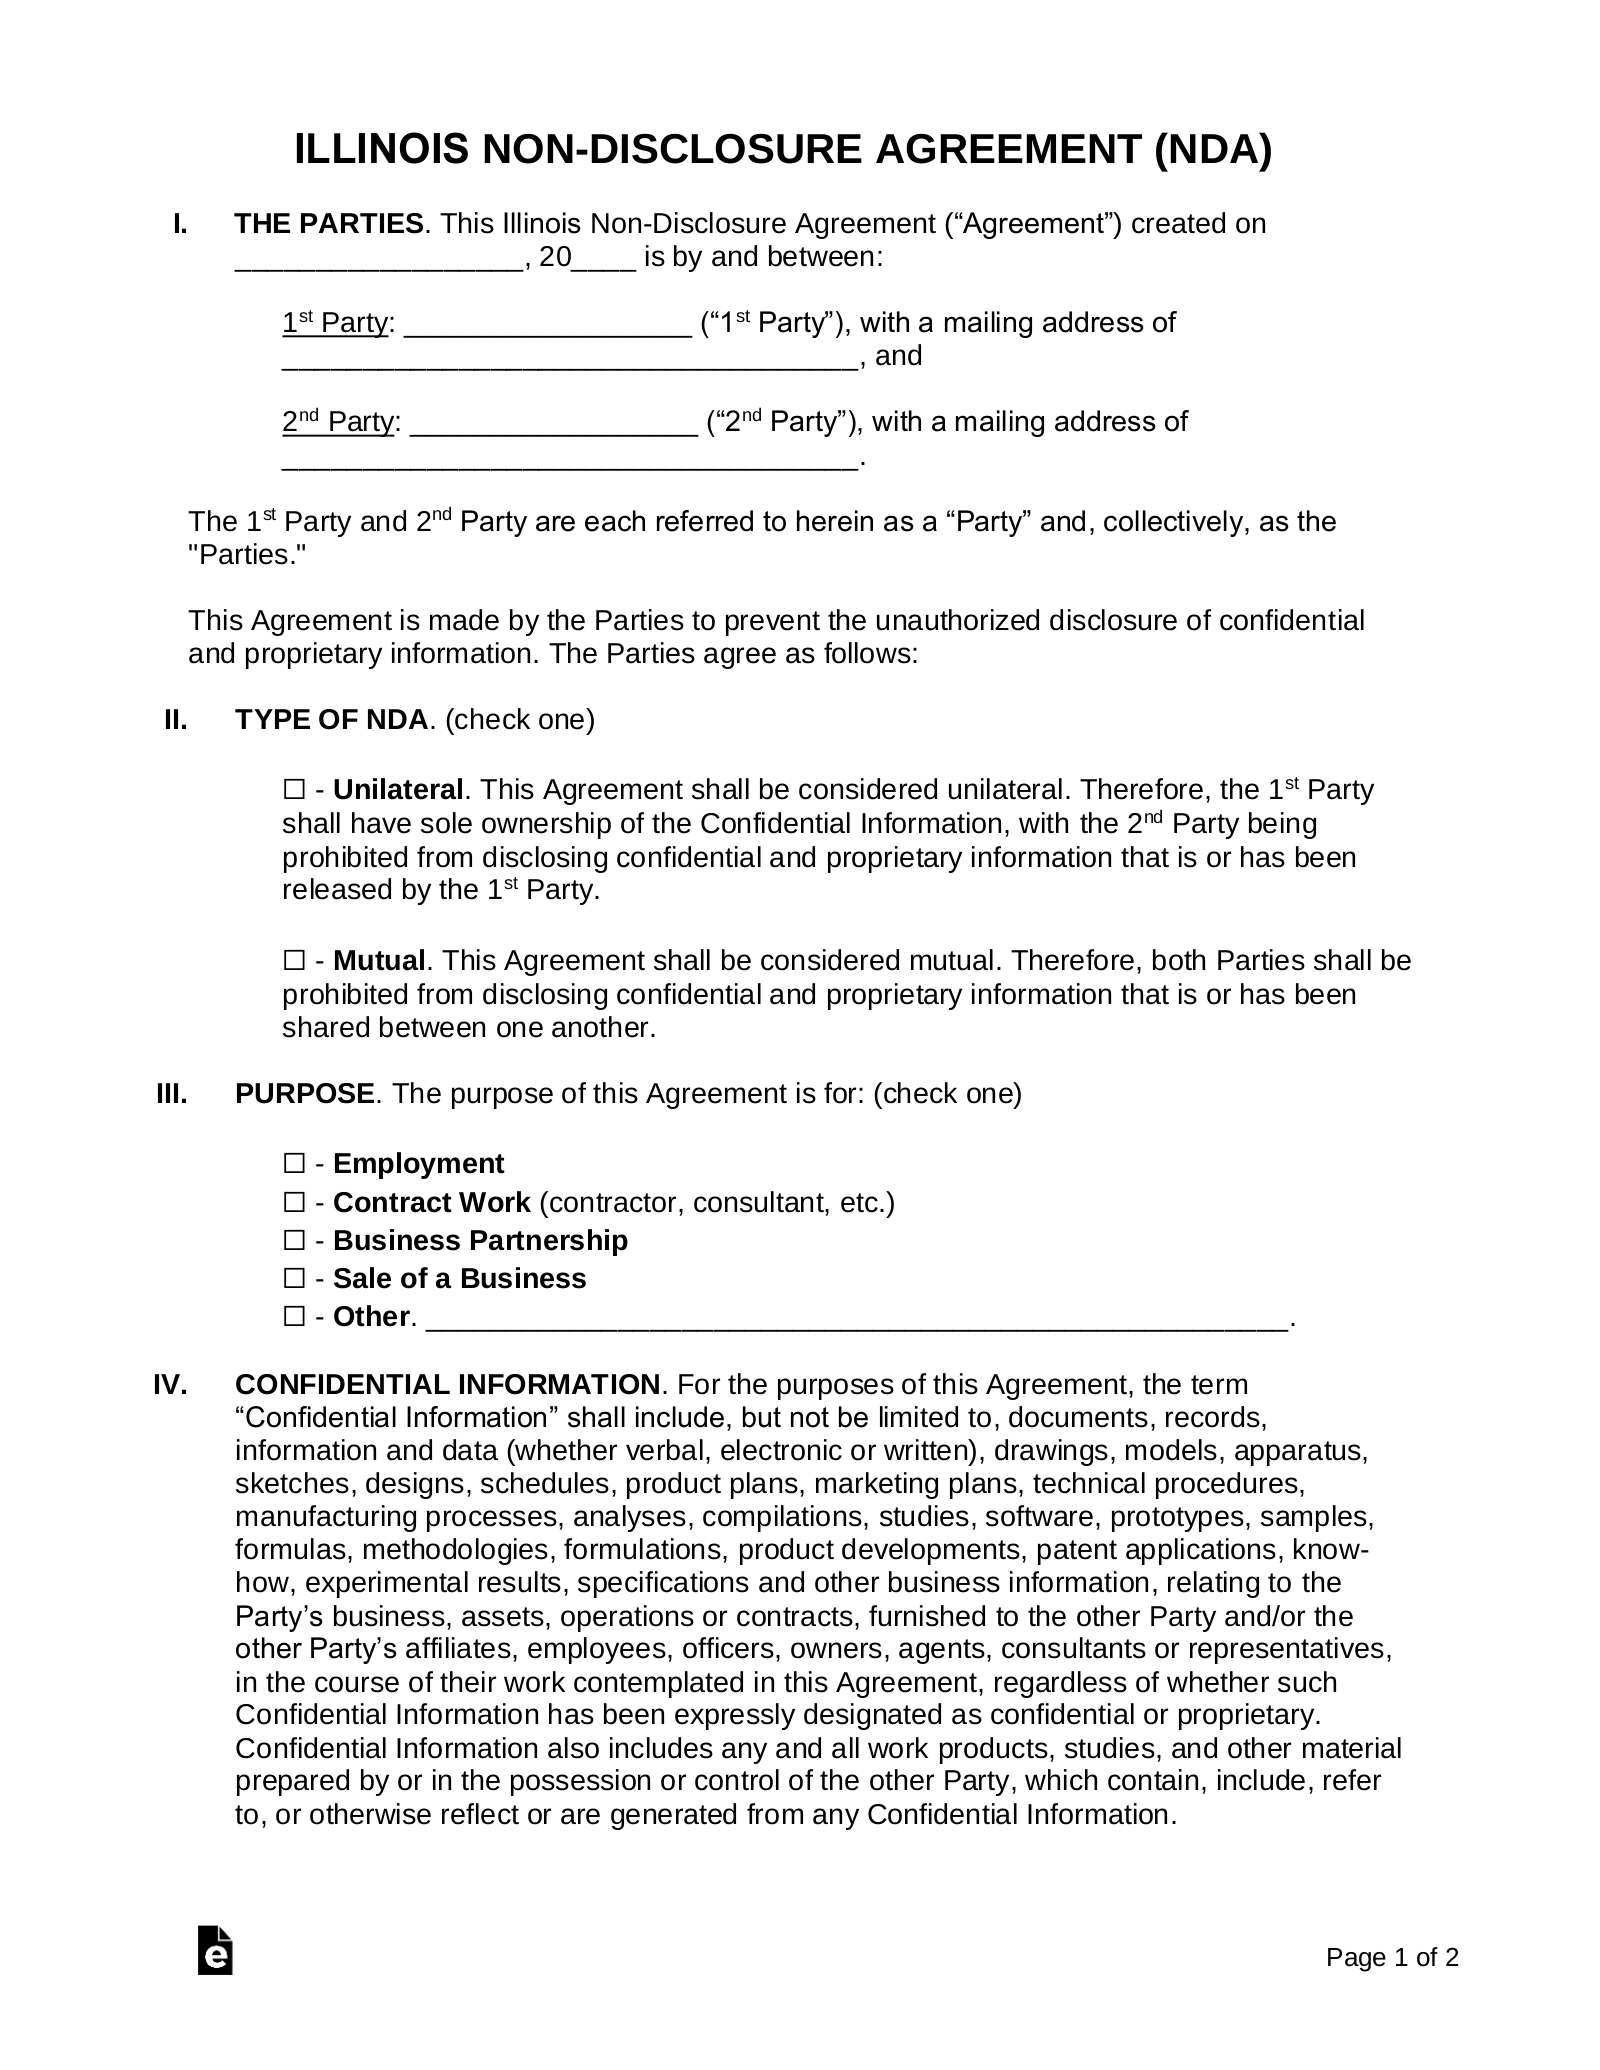 Illinois Non-Disclosure Agreement (NDA) Template